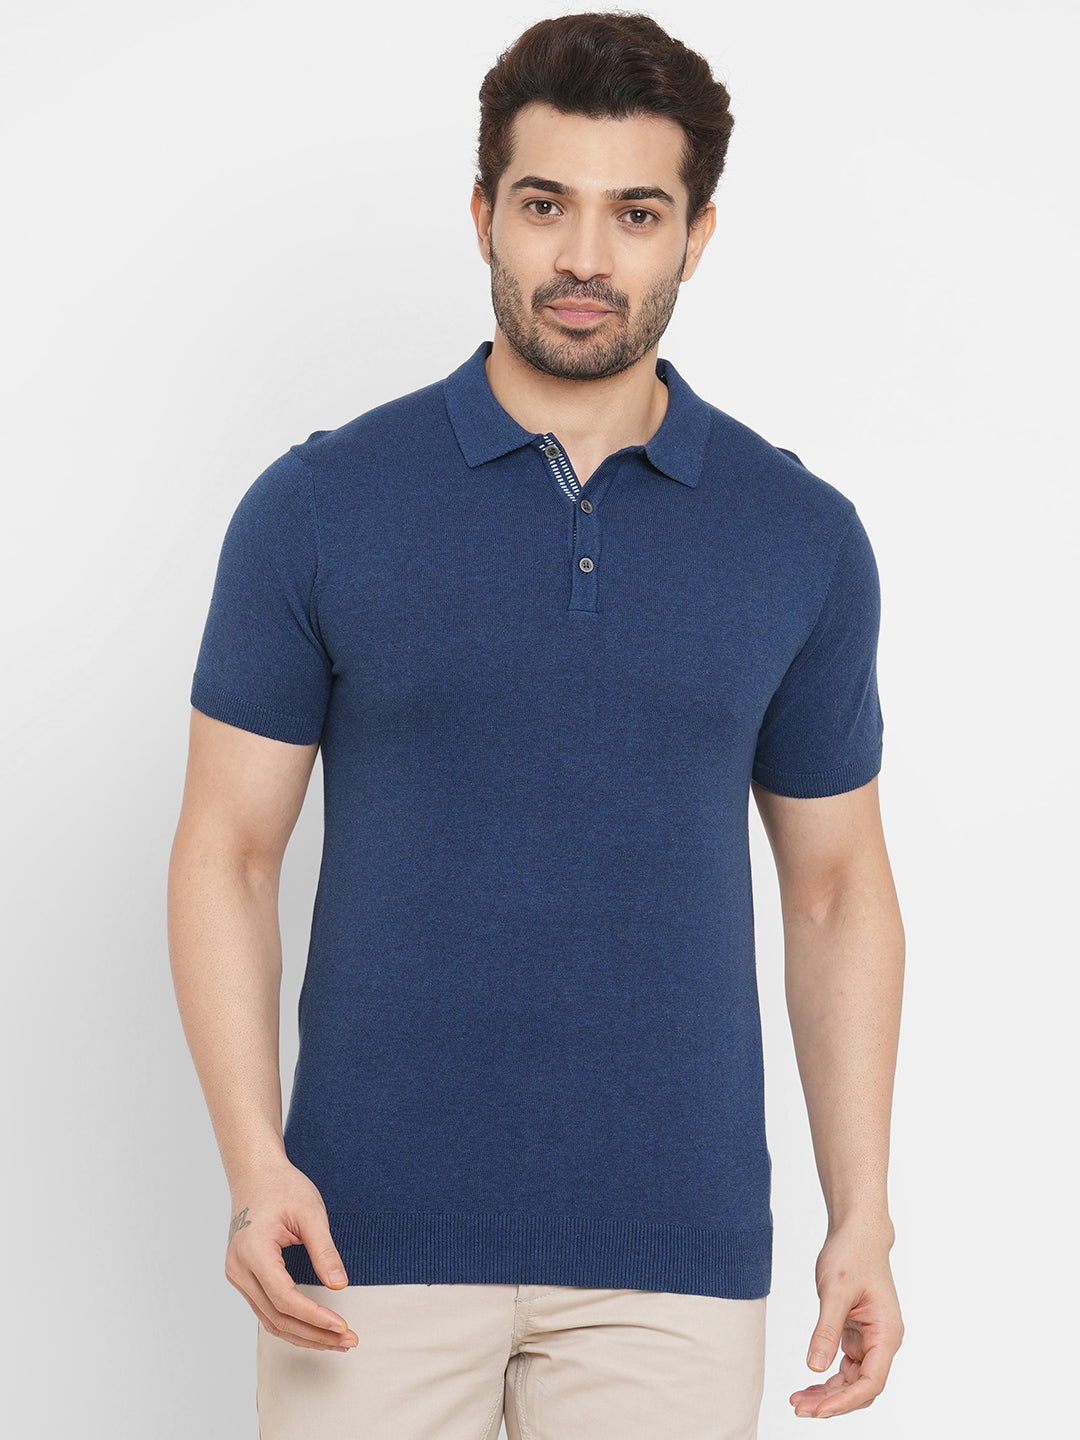 Men's Cotton Blend Short Sleeved Regular Fit Navy Tshirt